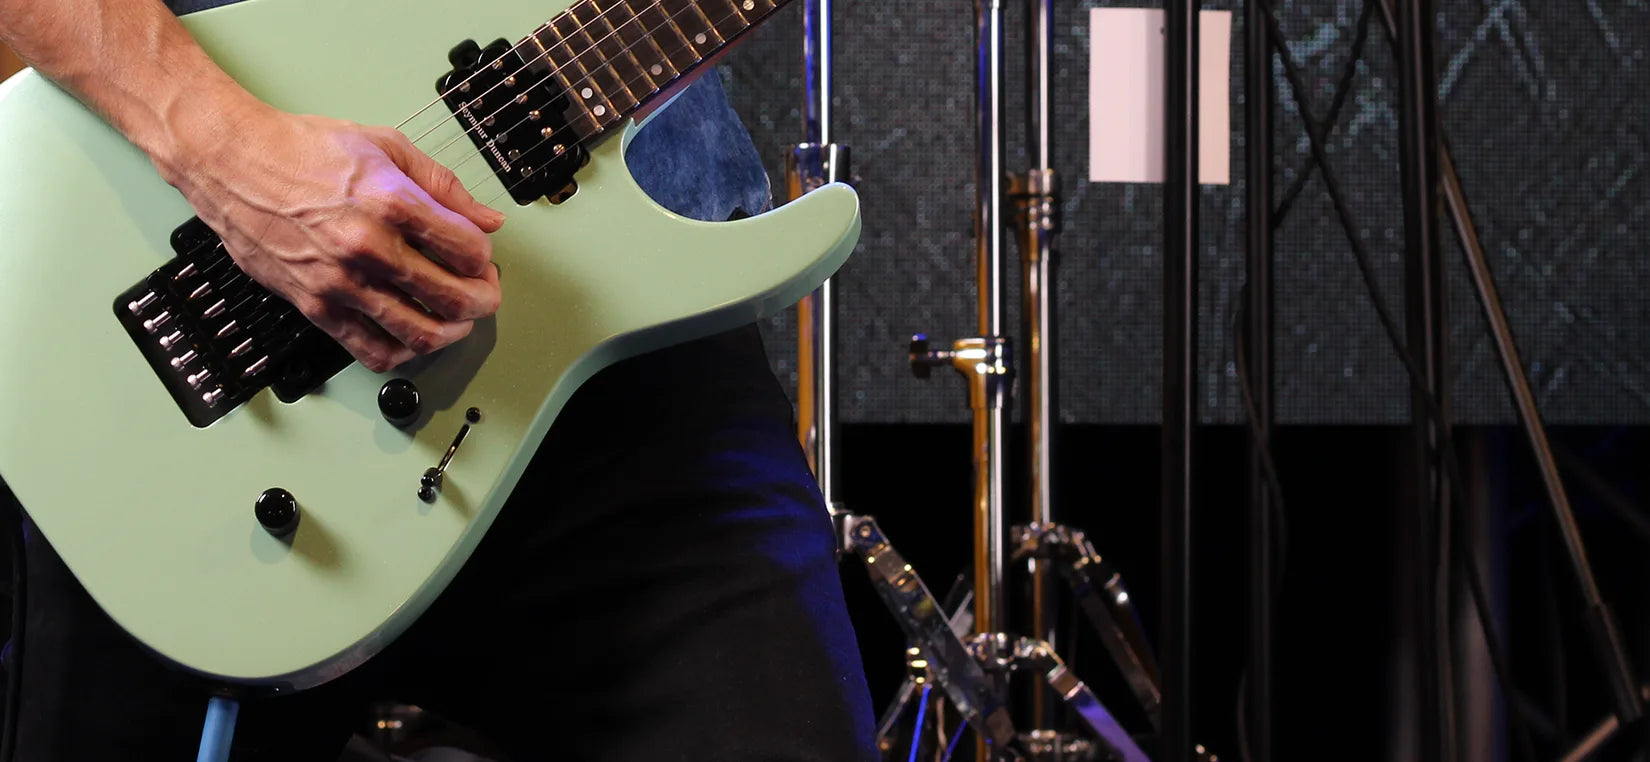 guitarra electrica verde siendo tocada por un guitarrista